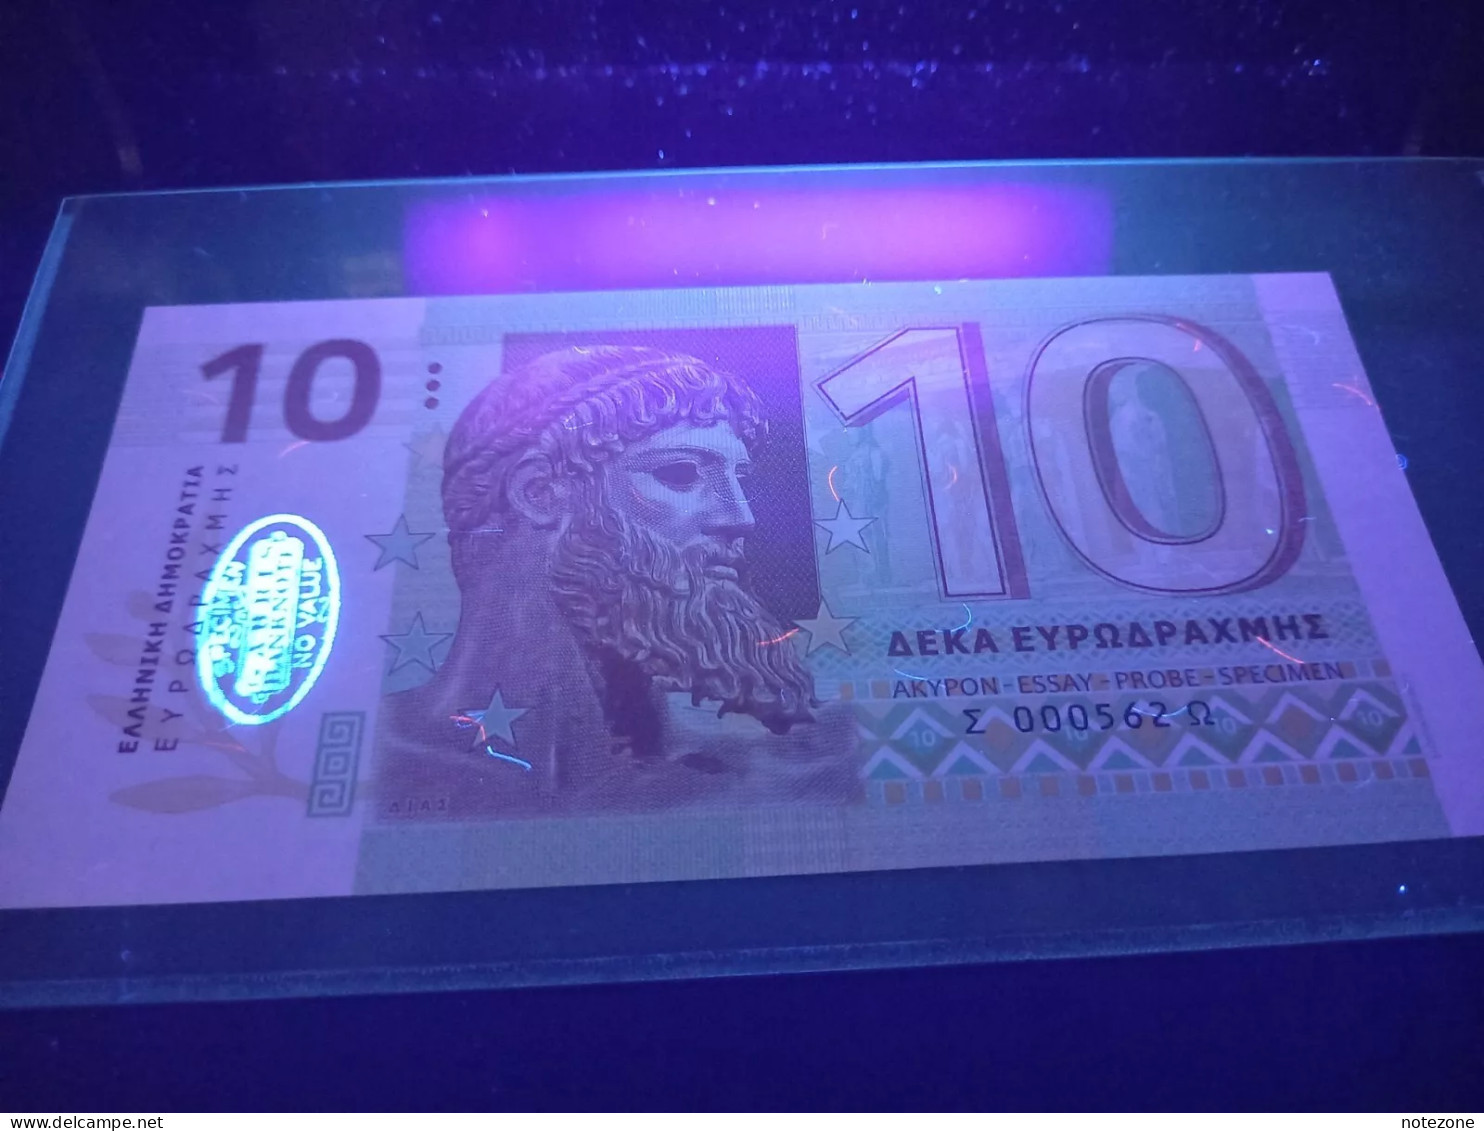 Matej Gabris 10 Eurodrachma Greece Banknote Private Fantasy Novelty Test - Greece